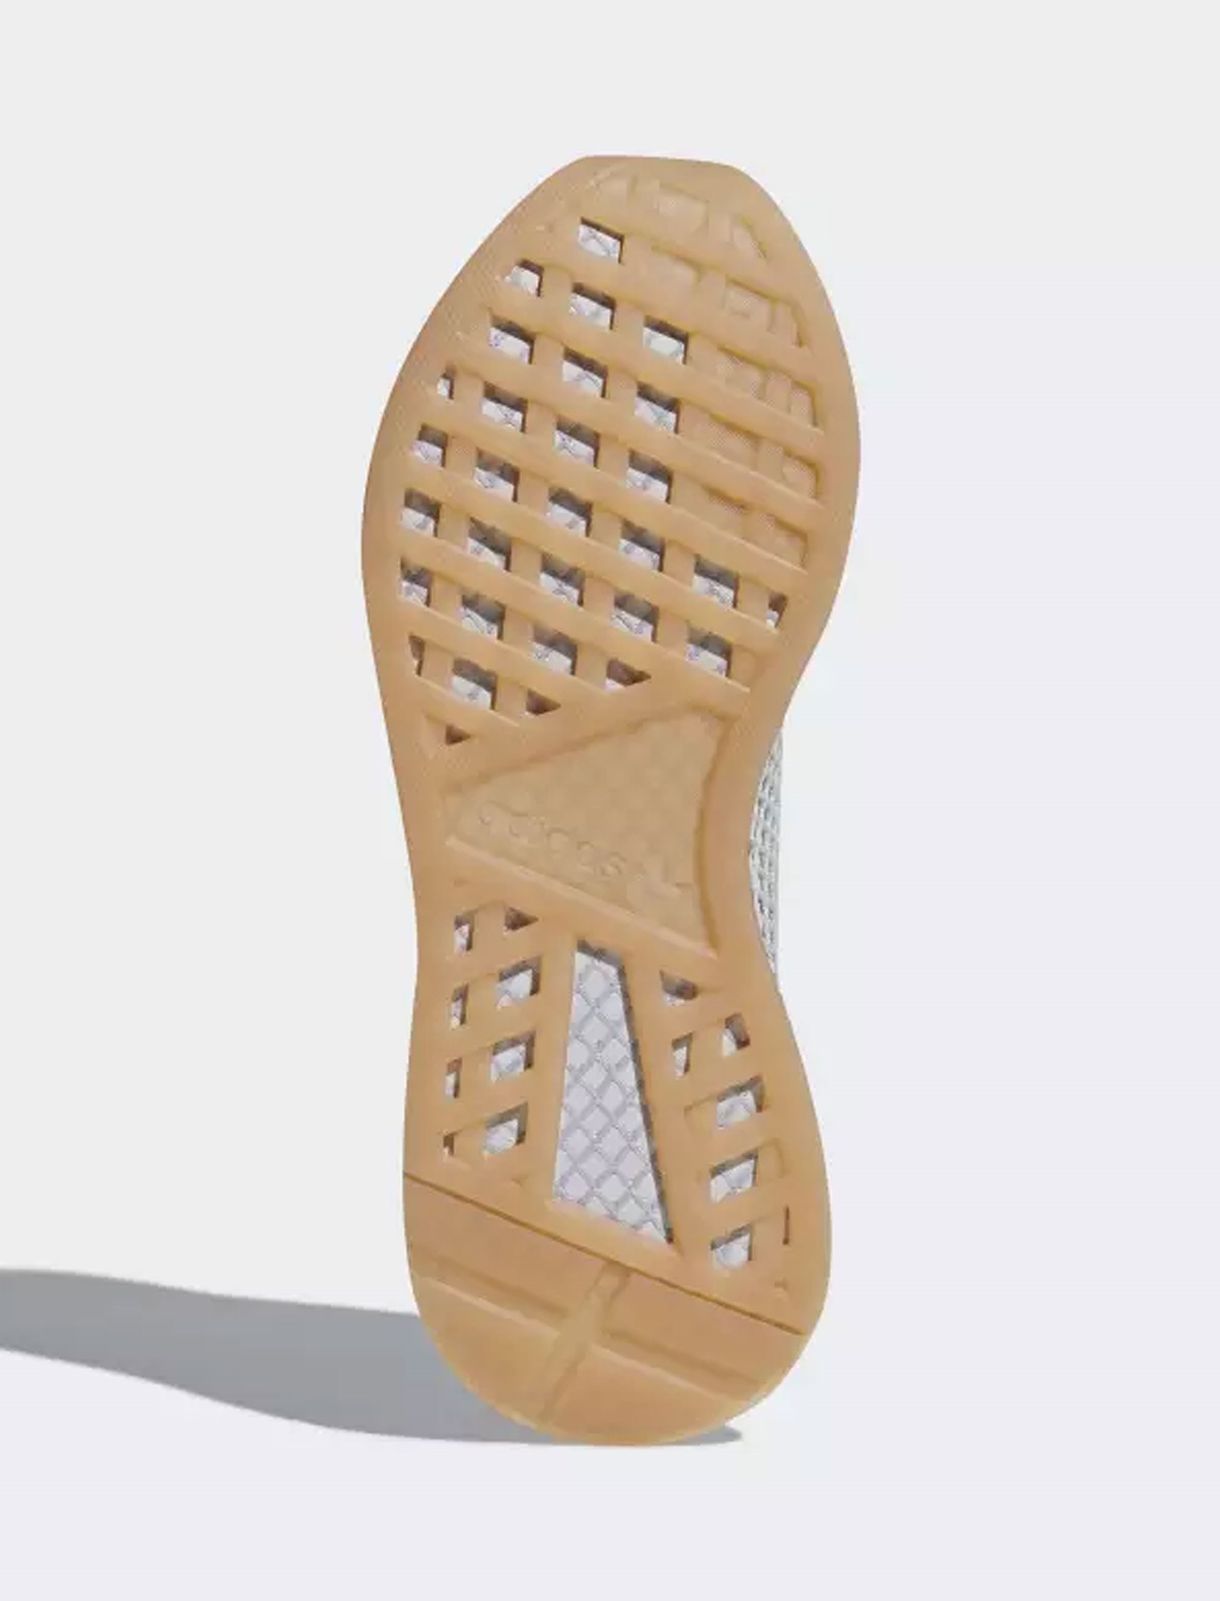 کفش مخصوص دویدن مردانه آدیداس مدل Deerupt